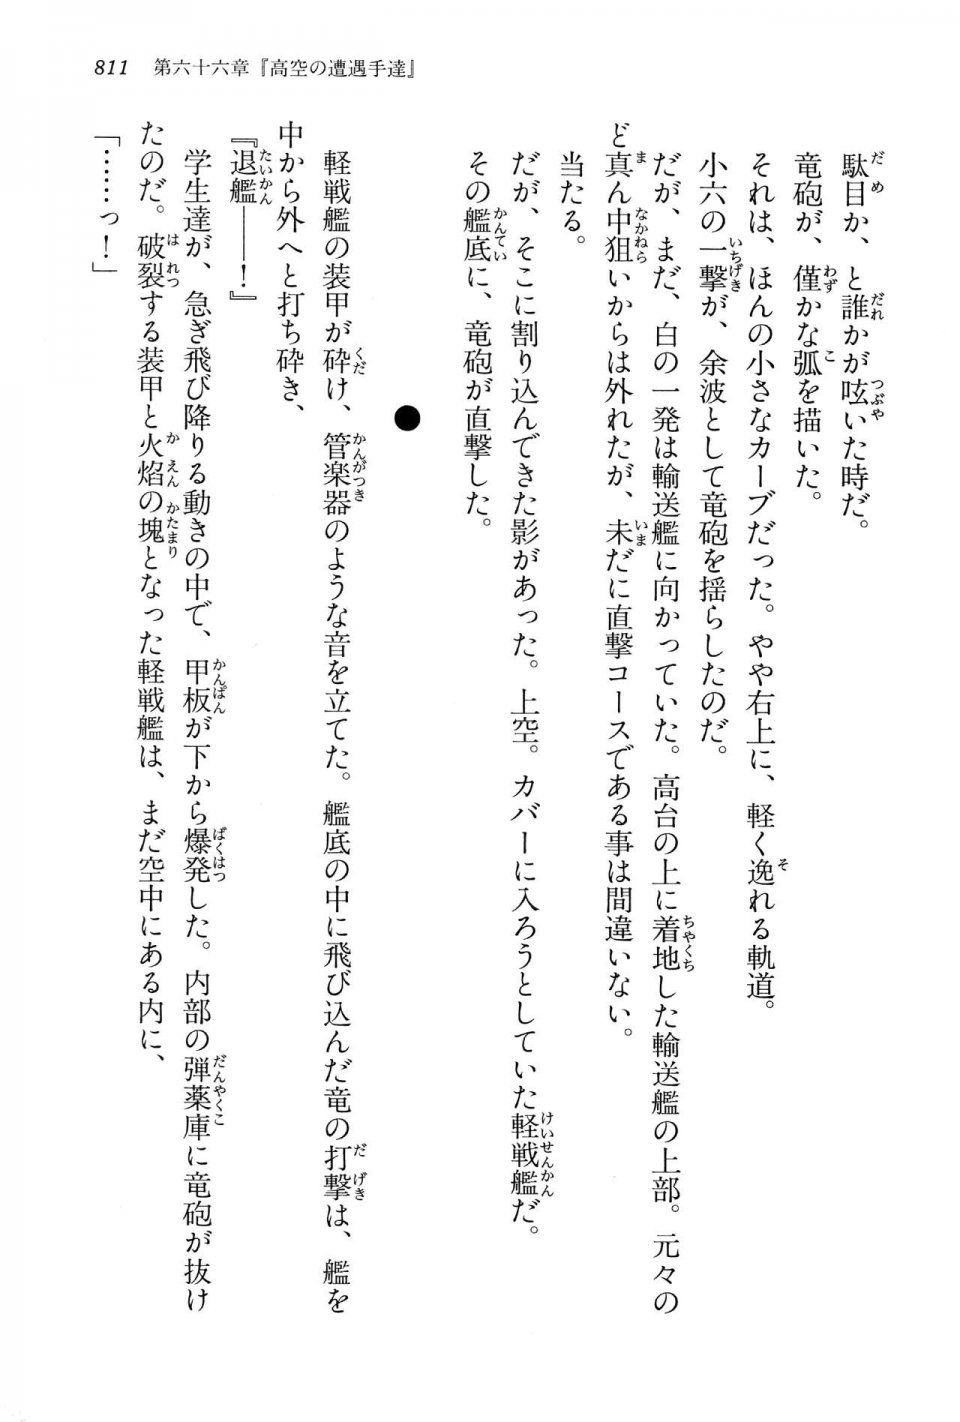 Kyoukai Senjou no Horizon LN Vol 15(6C) Part 2 - Photo #281